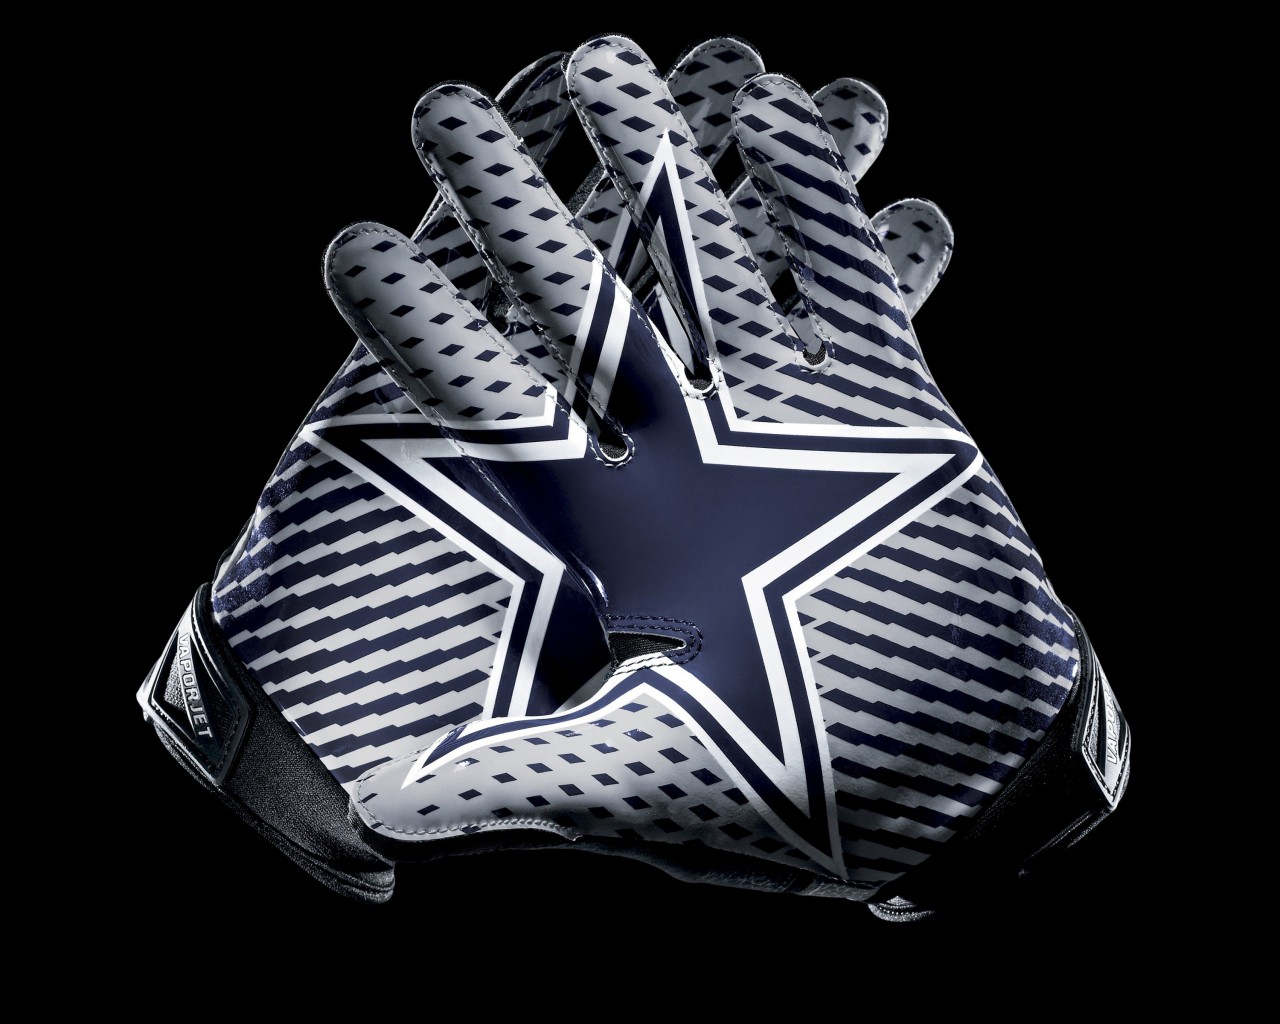 Dallas Cowboys Gloves Wallpaper for Desktop 1280x1024